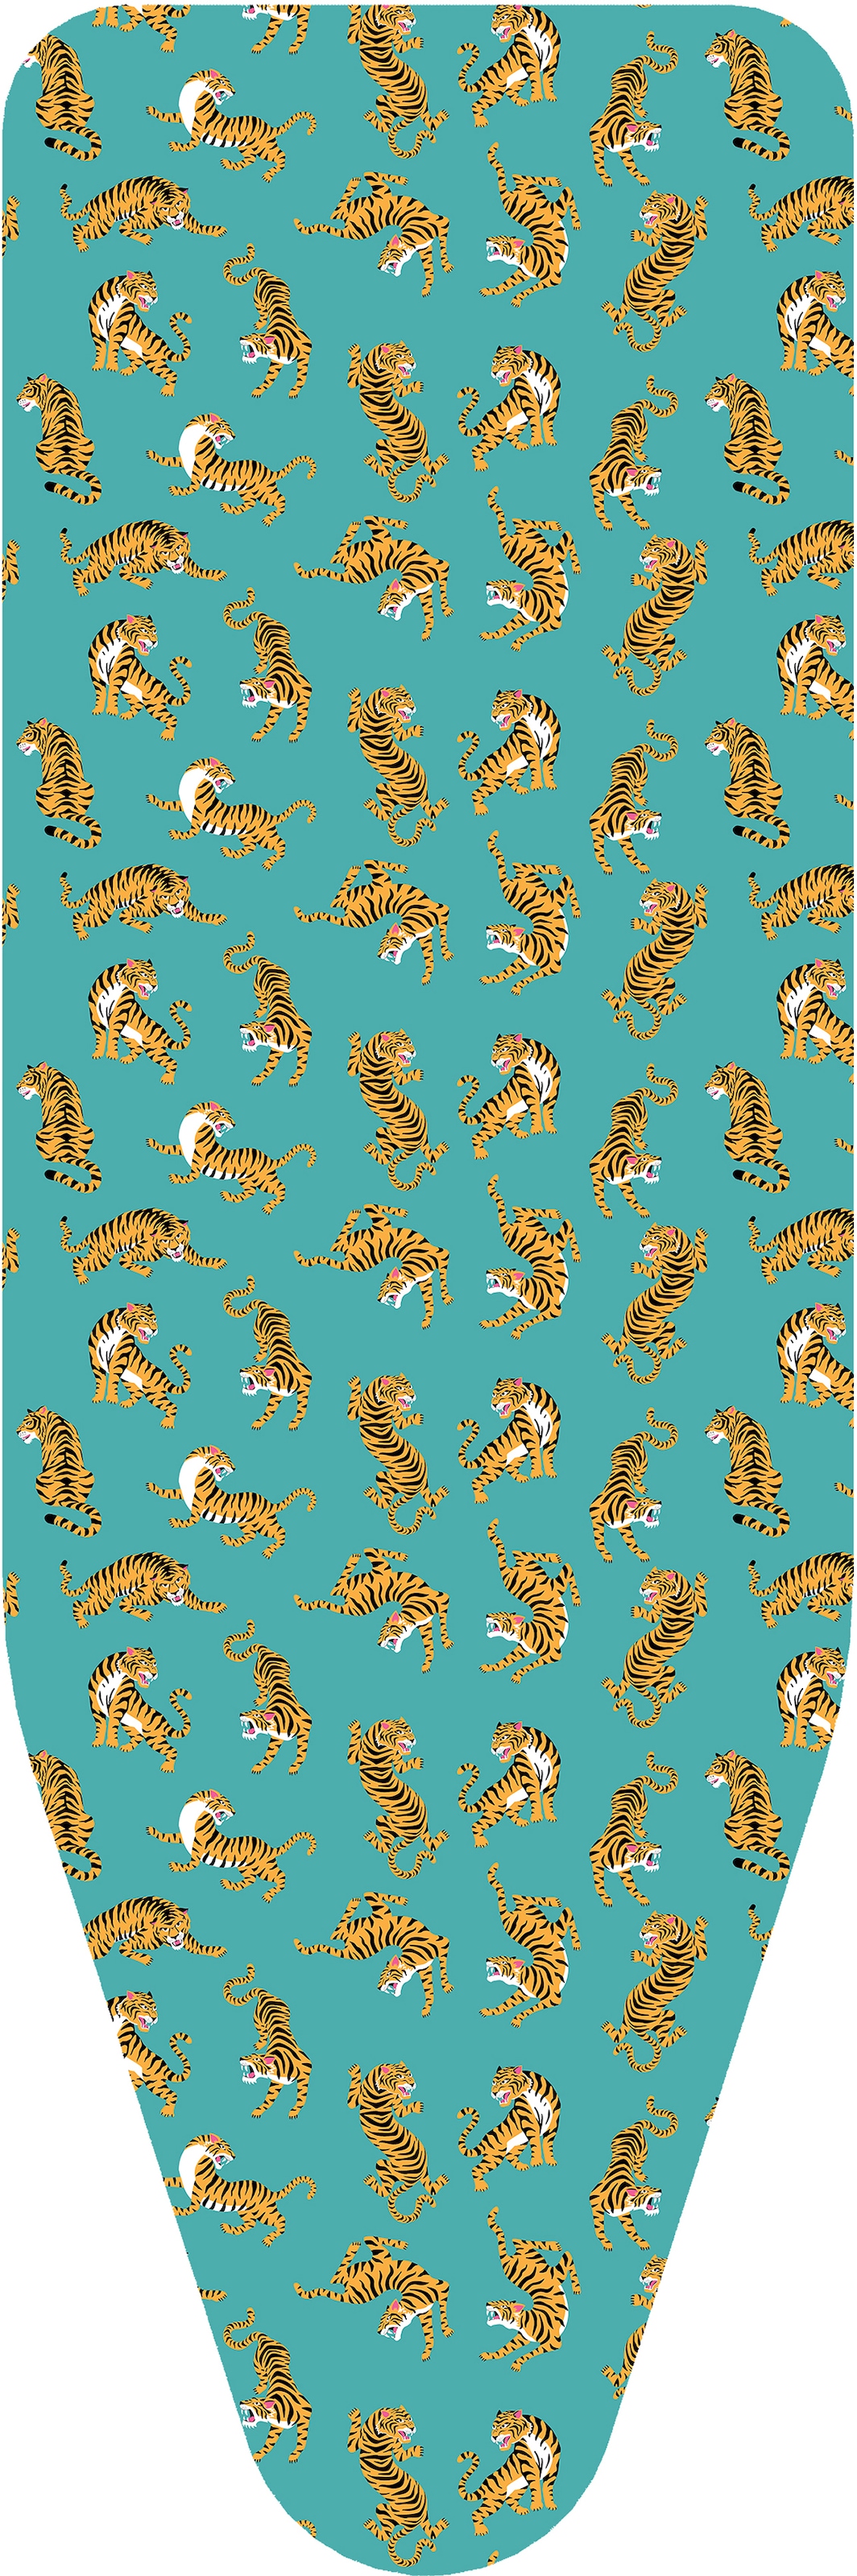 Bügelbrettbezug »Universal TIGER«, 140 x 55 cm